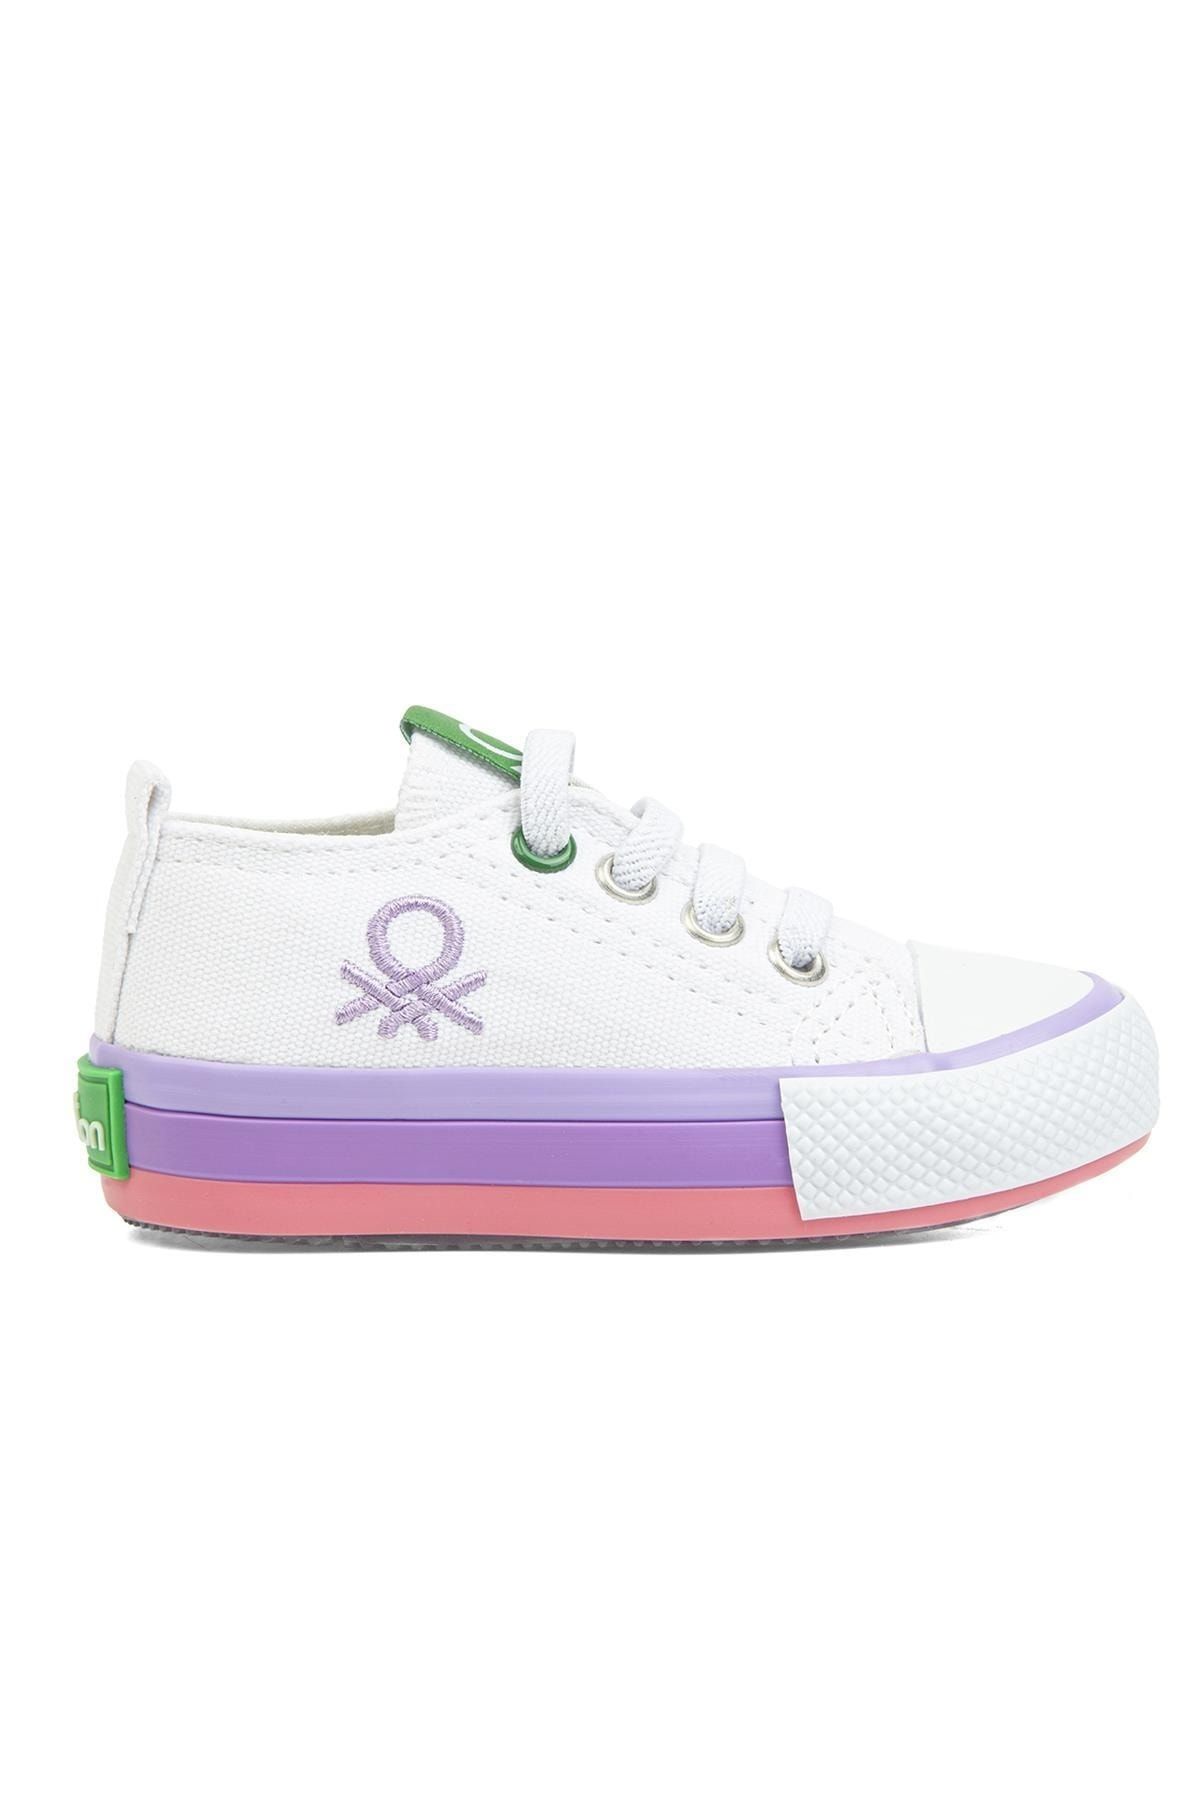 Benetton ® | Bn-30652 - 3394 یاسی سفید کفش ورزشی بچه گانه